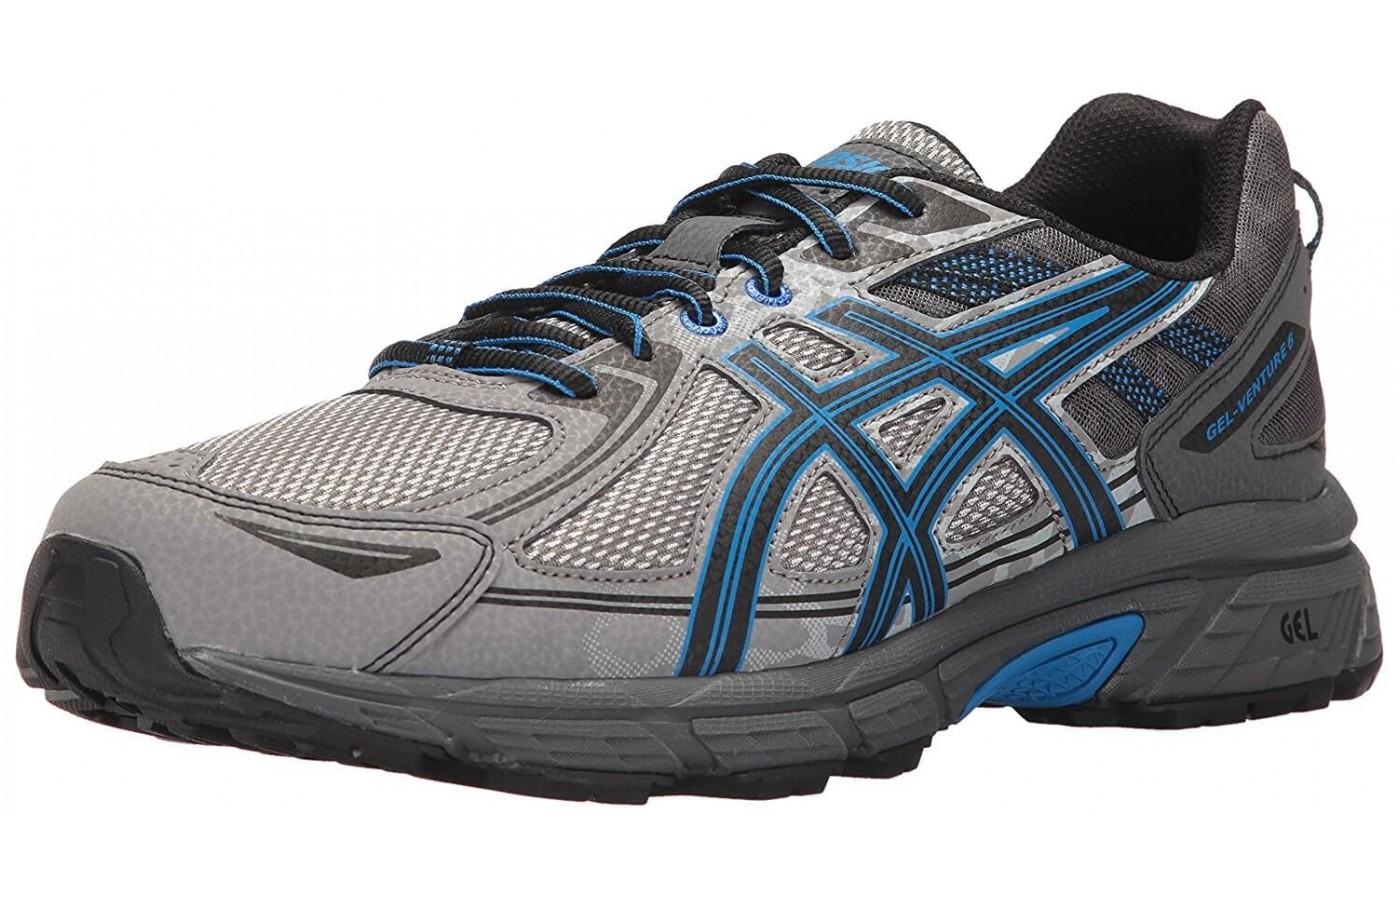 Asics Gel Venture 6 is a dependable trail shoe